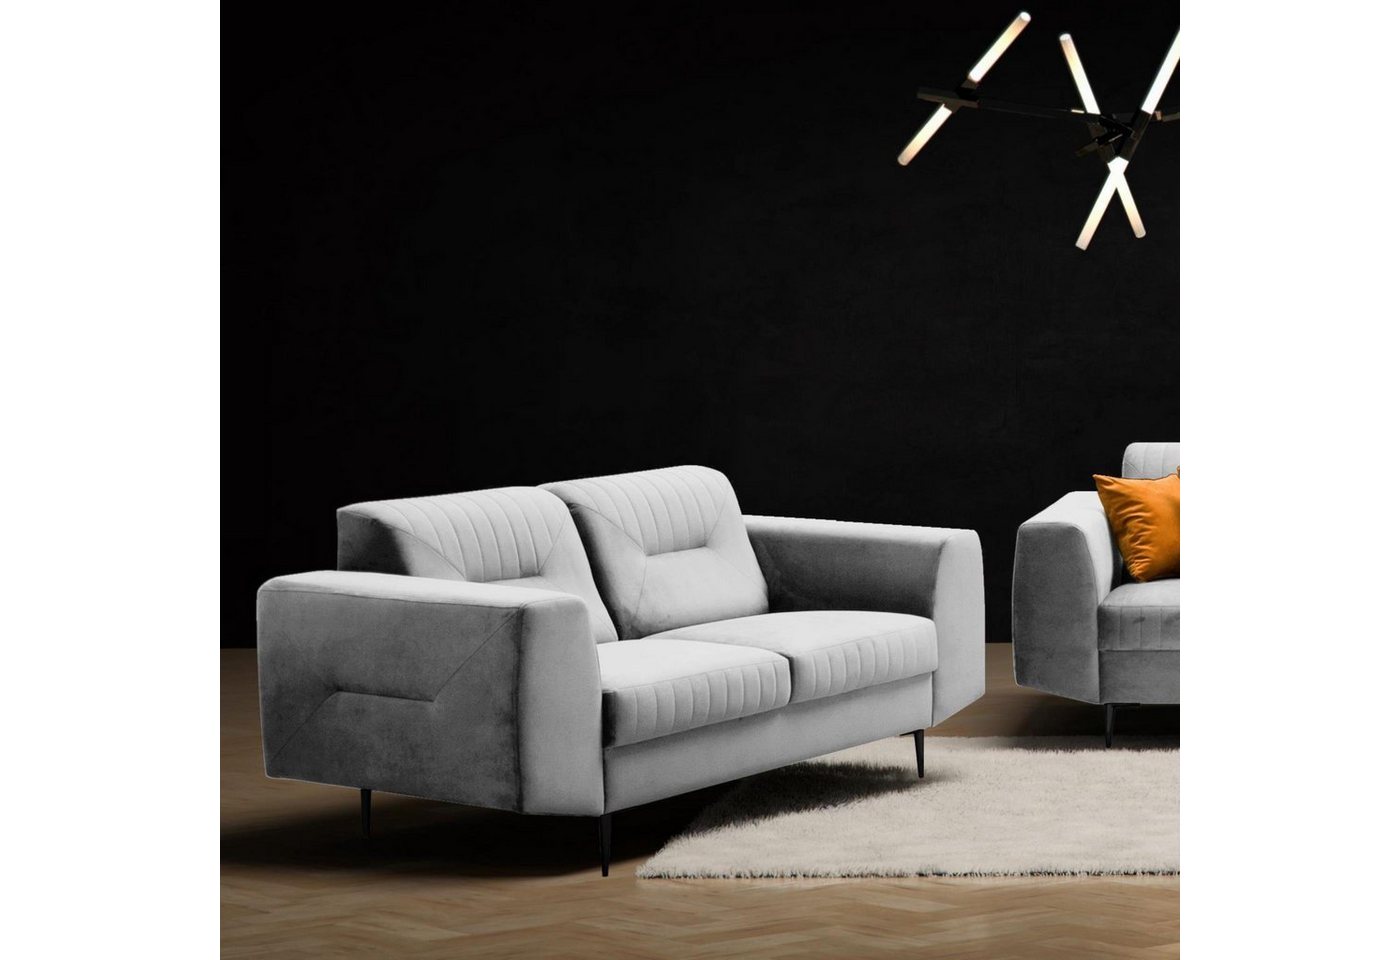 Beautysofa 2-Sitzer VENEZIA, Relaxsofa im modernes Design, mit Metallbeine, Zweisitzer Sofa aus Velours von Beautysofa